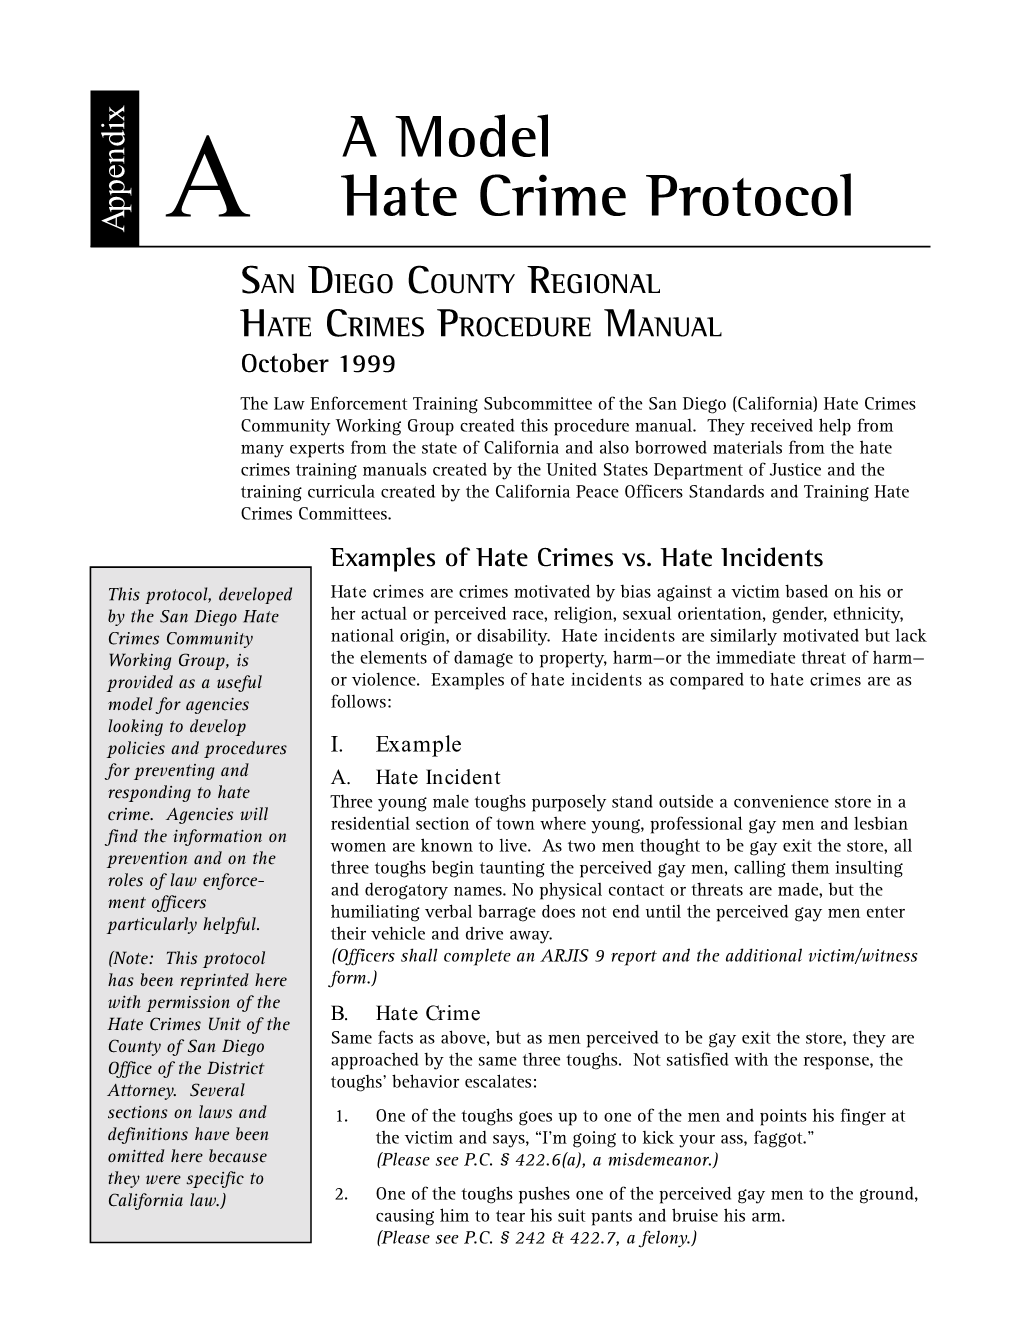 Model Hate Crime Protocol